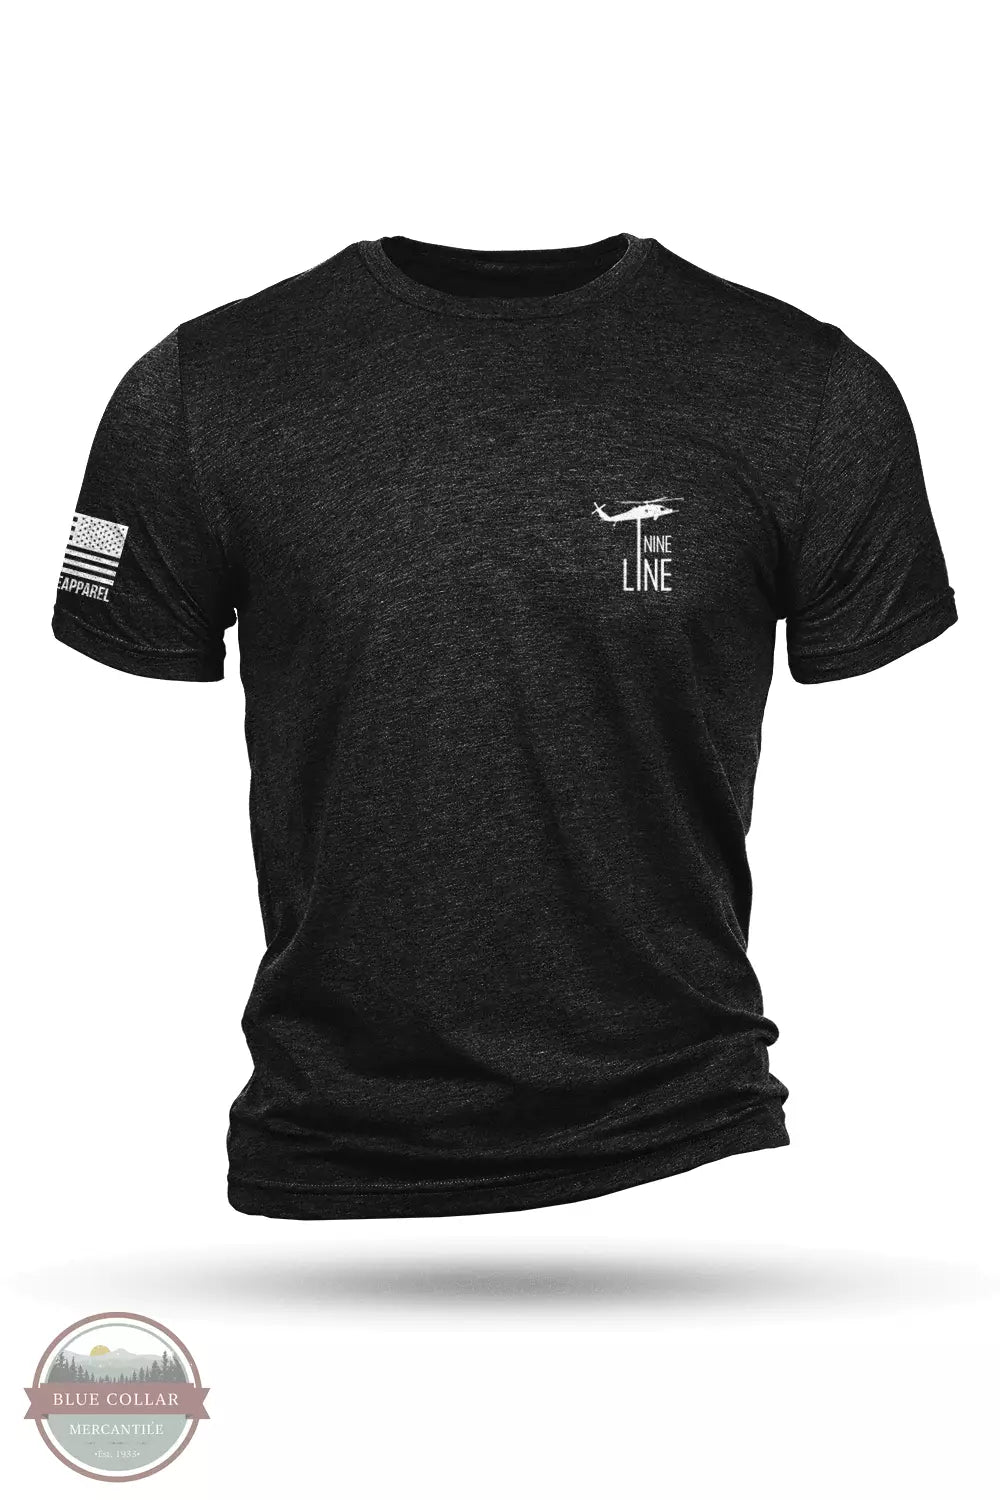 Nine Line TBL-TSTRI-CHARCOALBLACK Thin Blue Line Tri-Blend Short Sleeve T-Shirt in Charcoal Black Front View